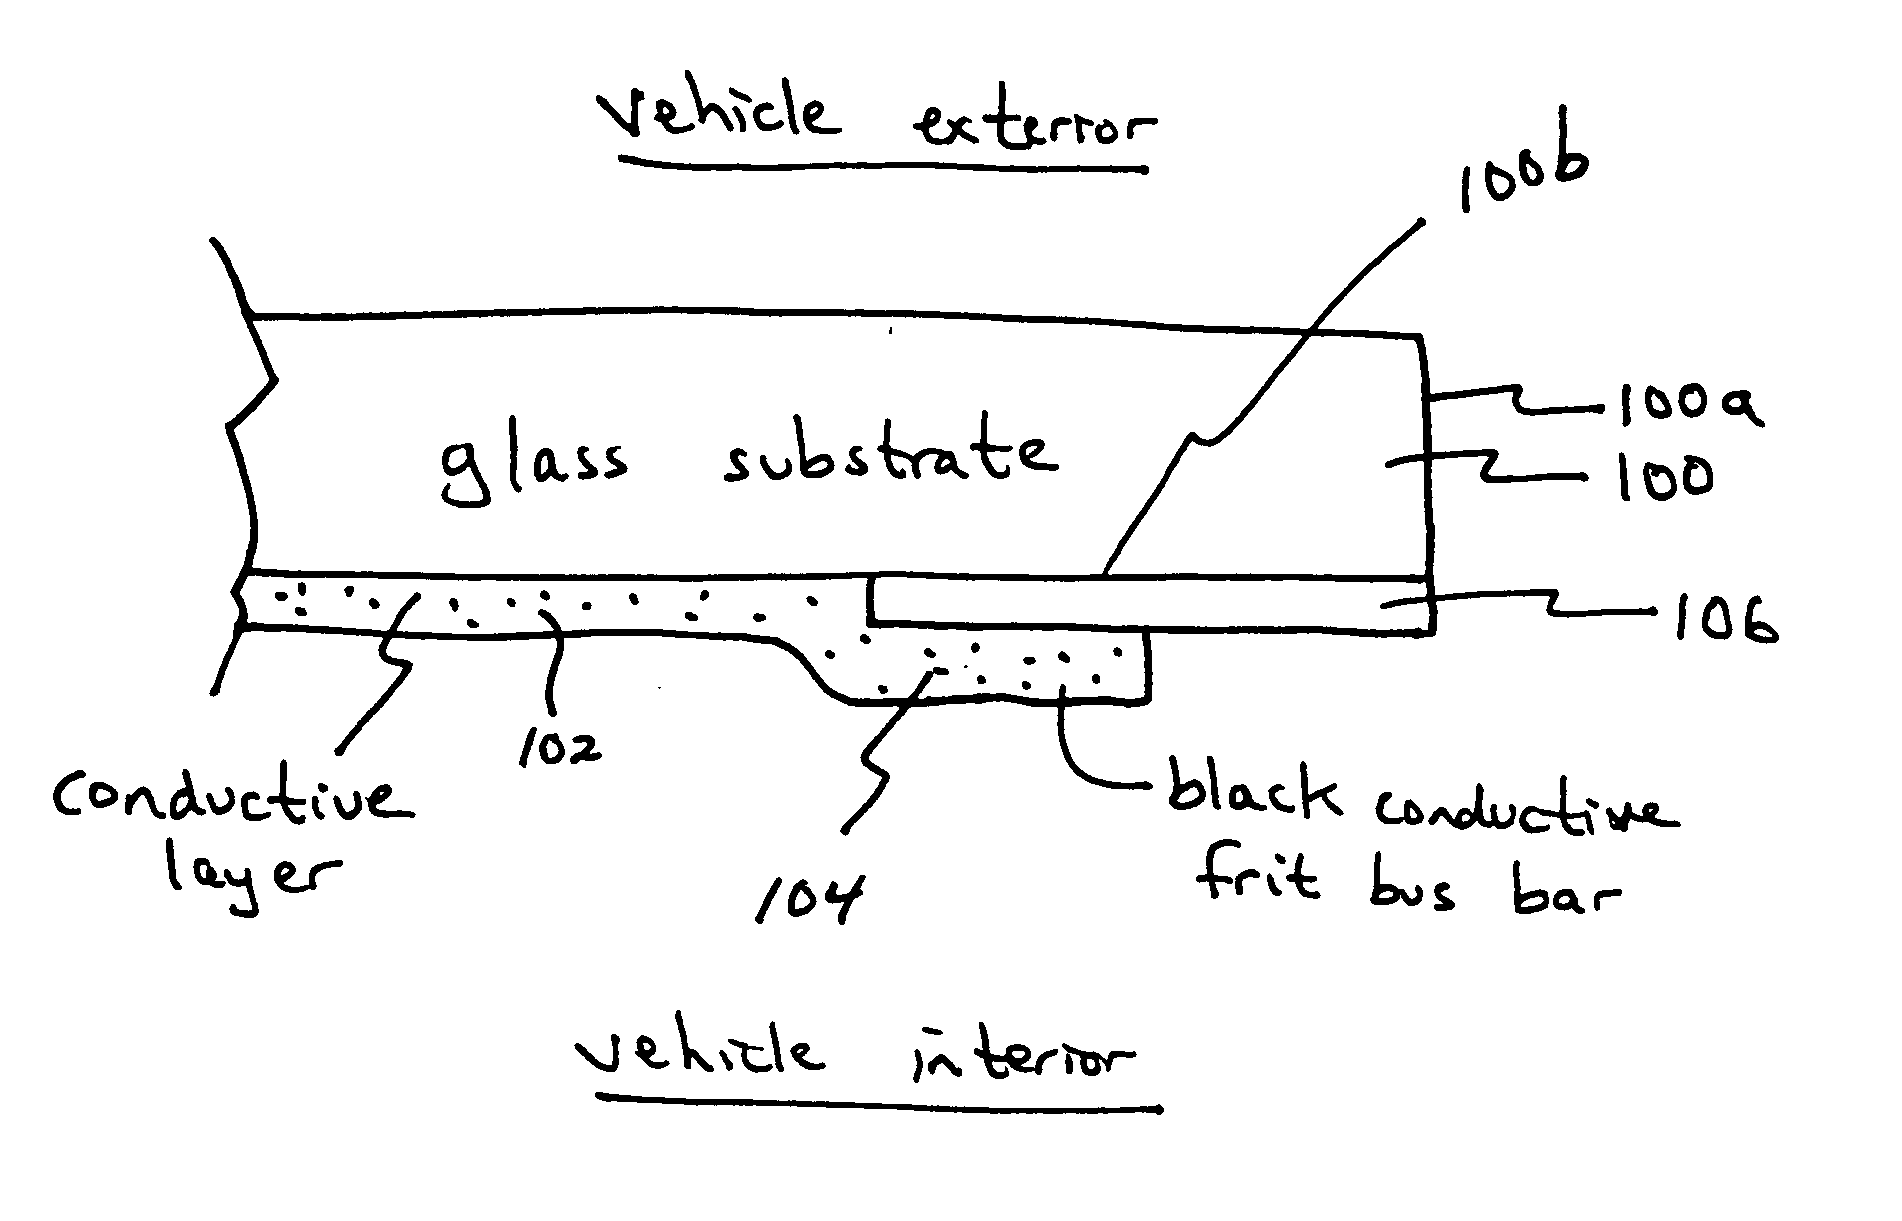 Vehicle window having bus bar(s) of conductive black frit